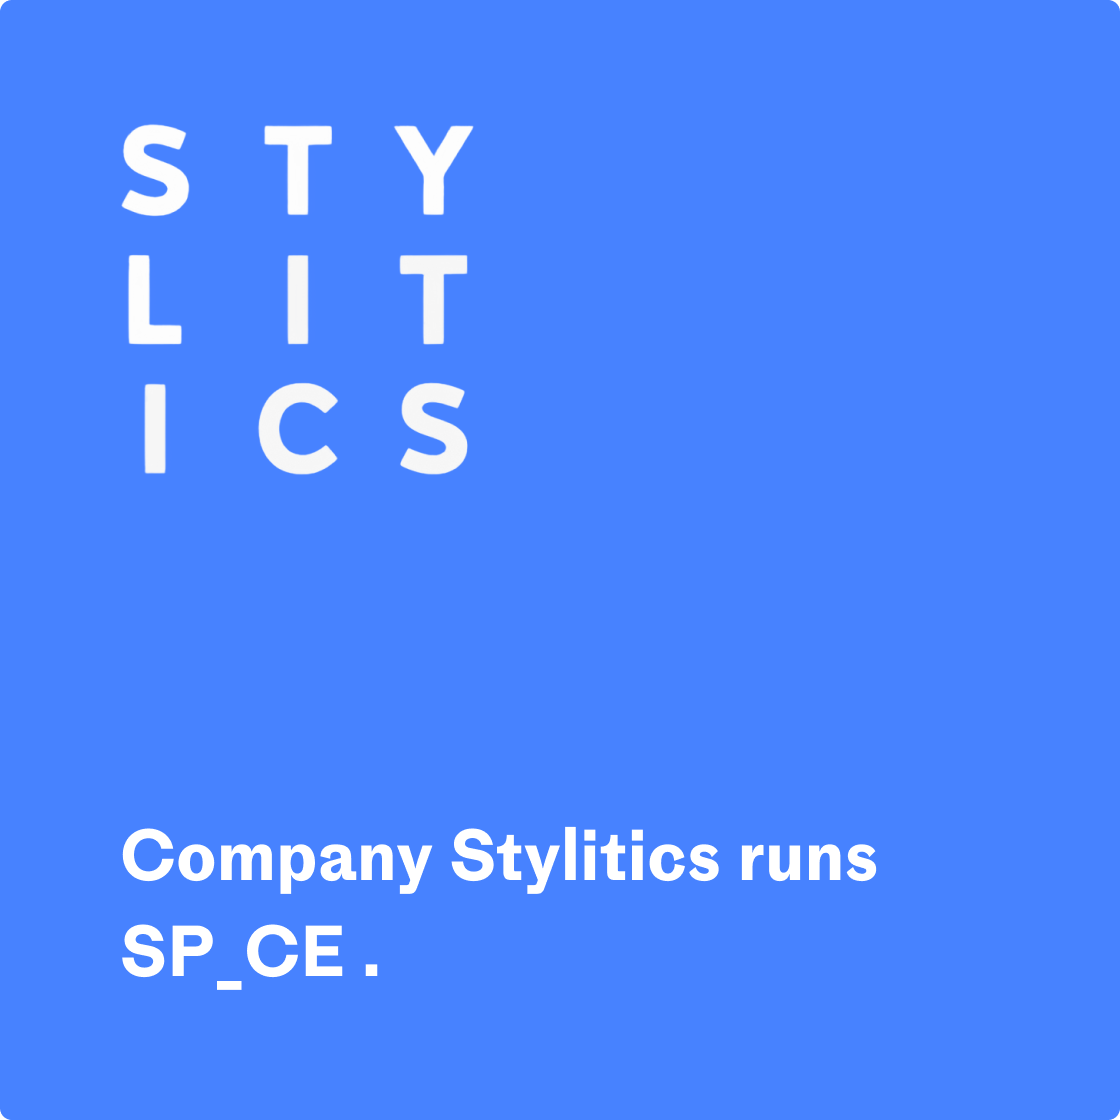 Company Stylitics runs sp_ce.